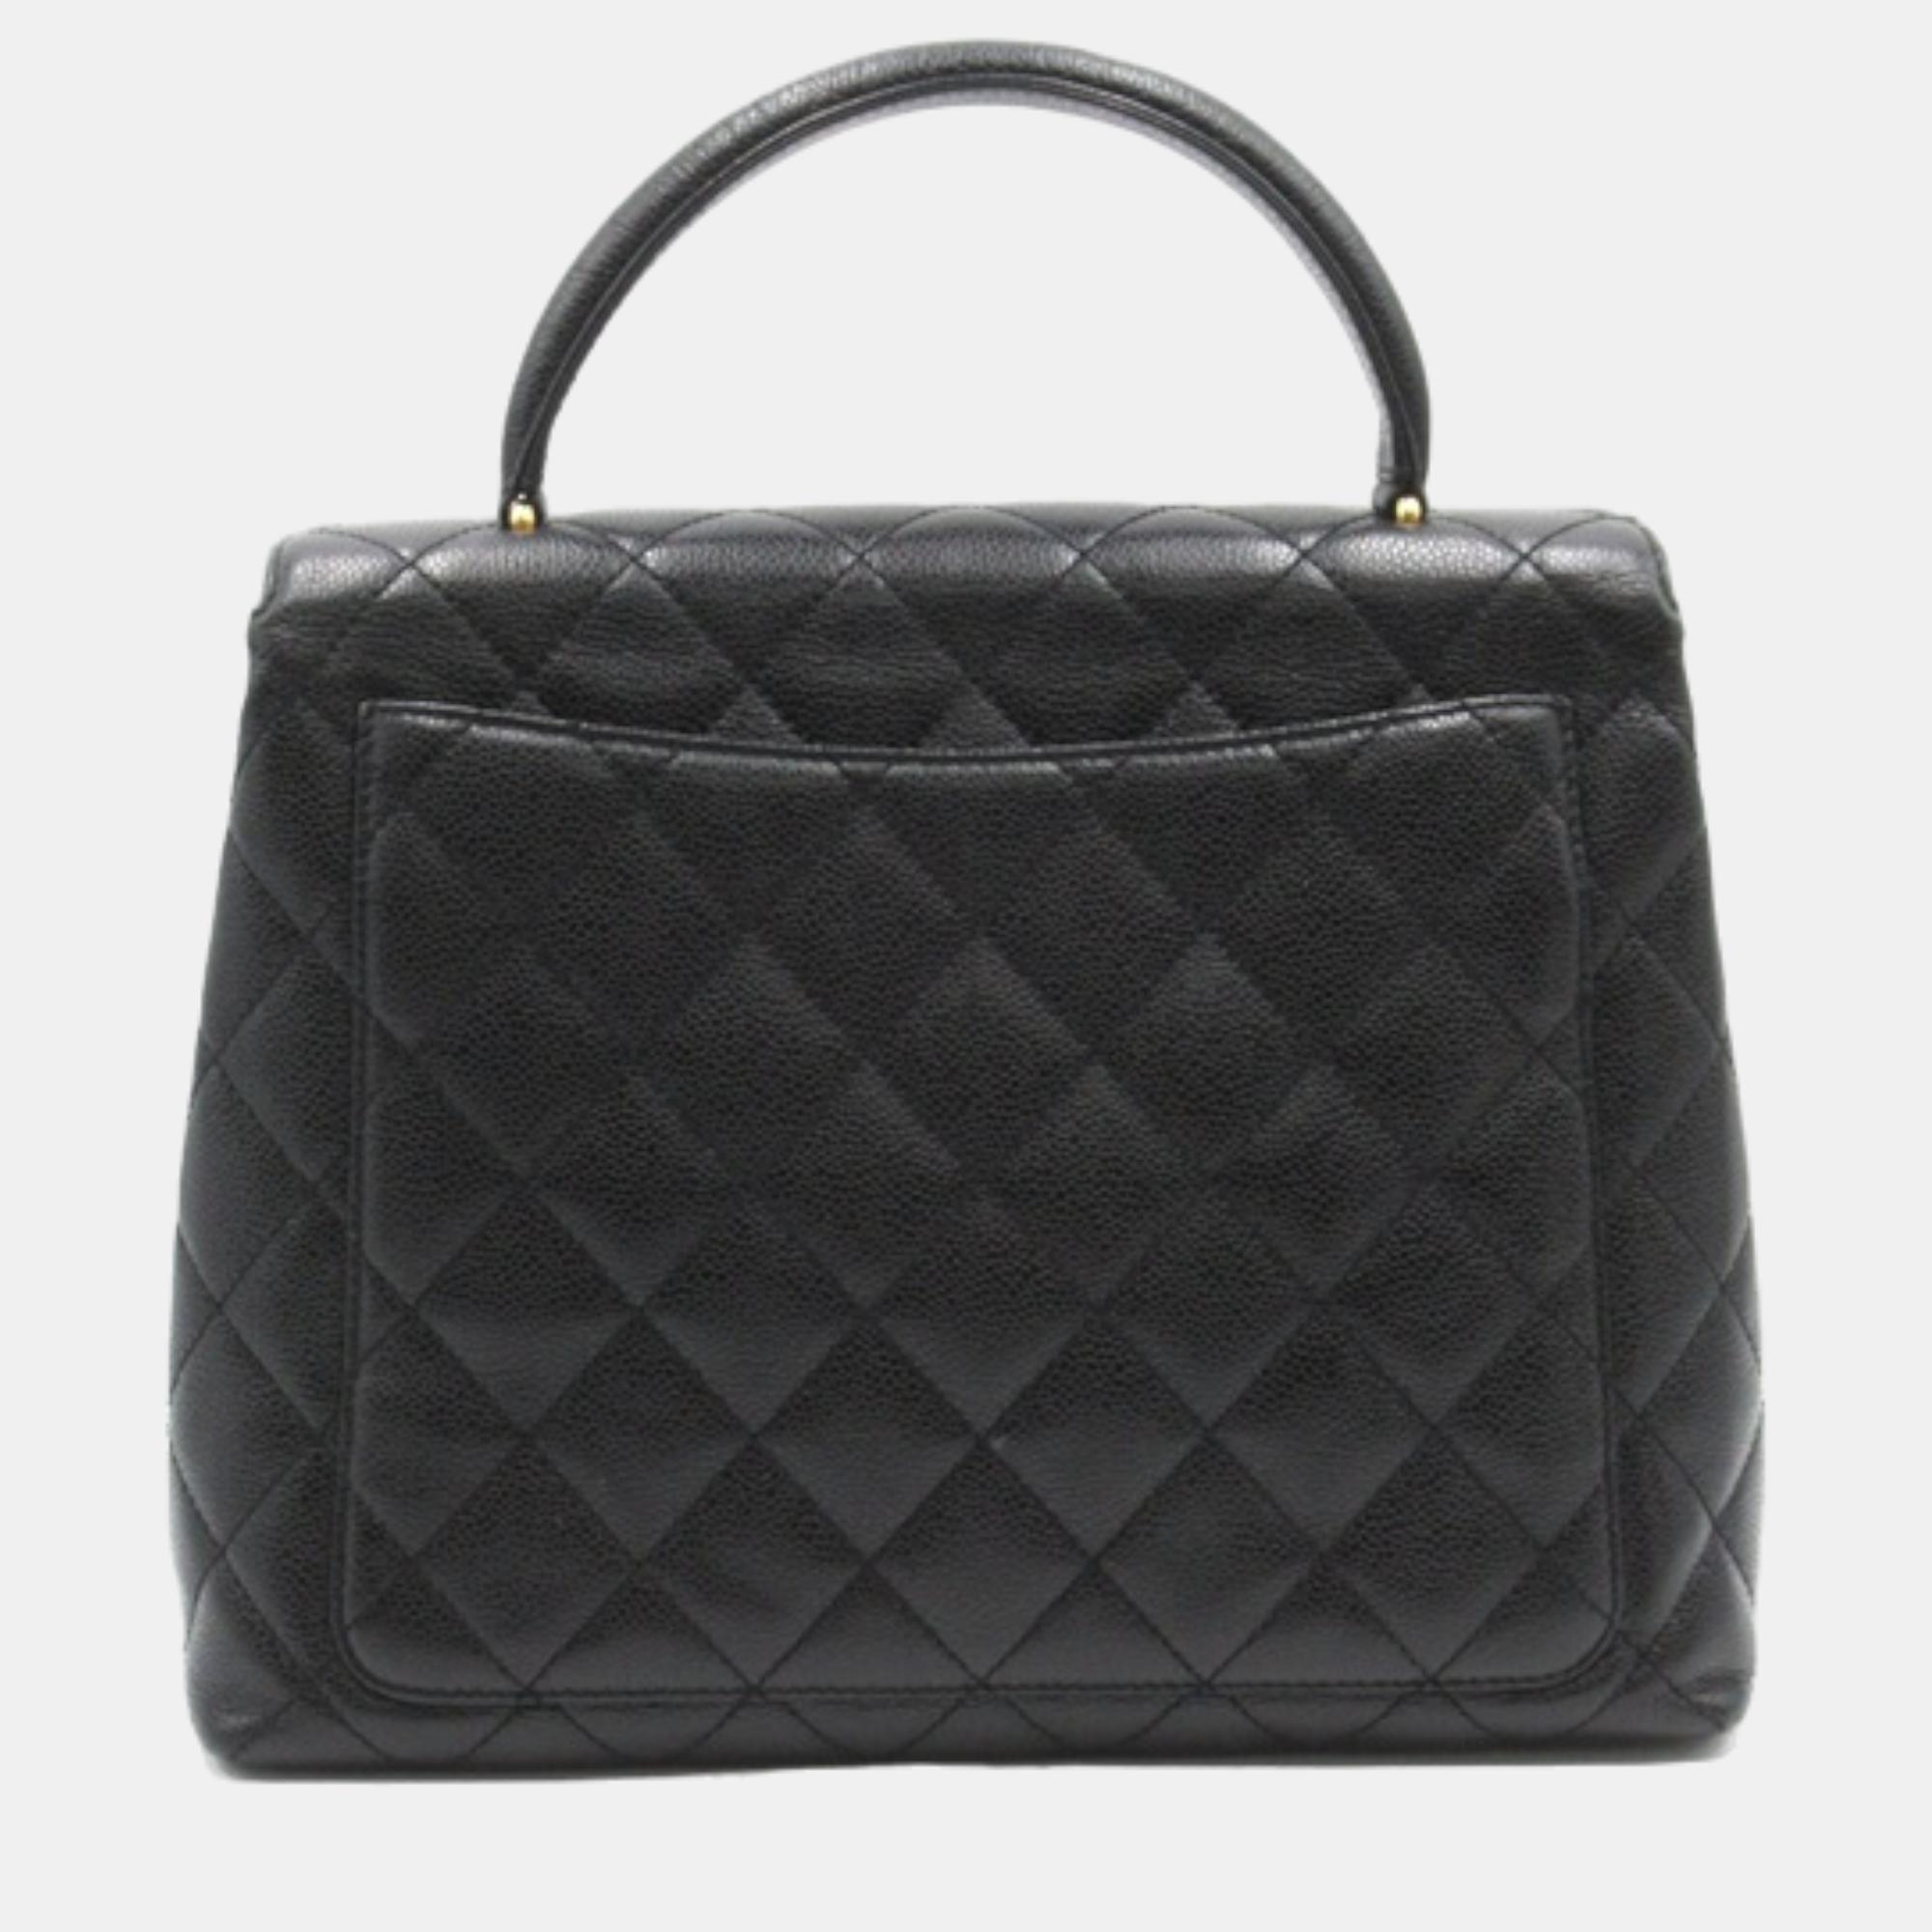 Chanel Black CC Caviar Kelly Top Handle Bag